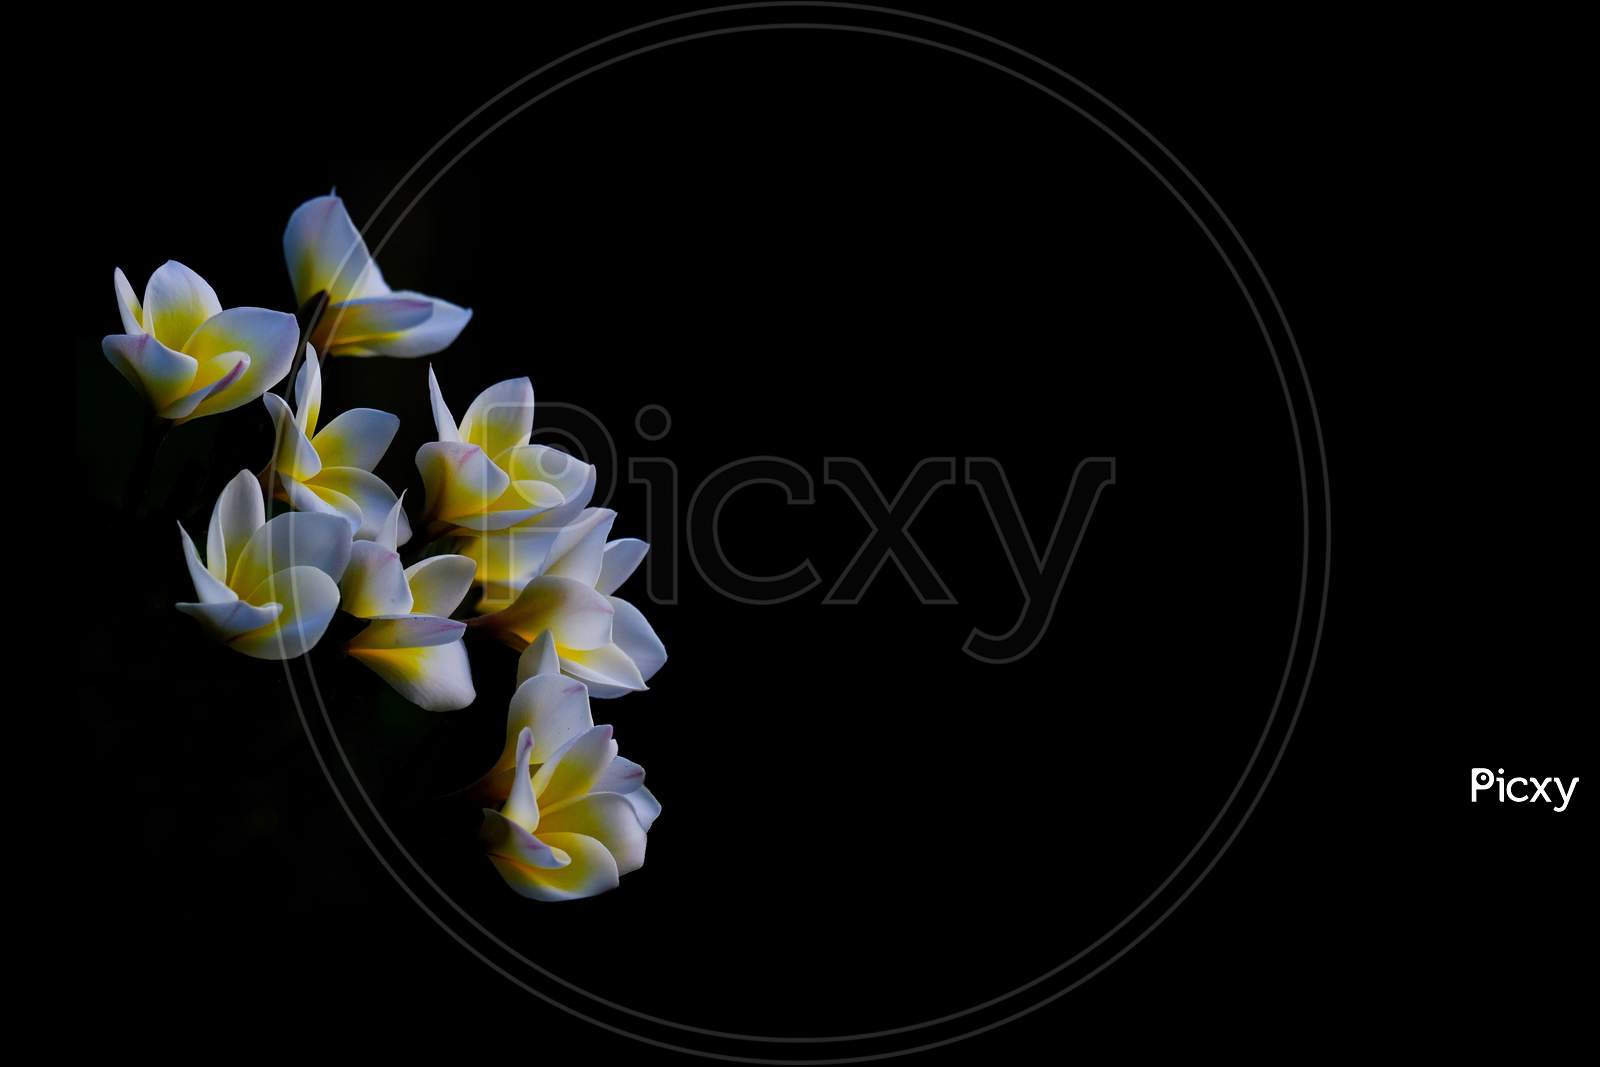 White Frangipani Flowers Or Plumeria On Black Background